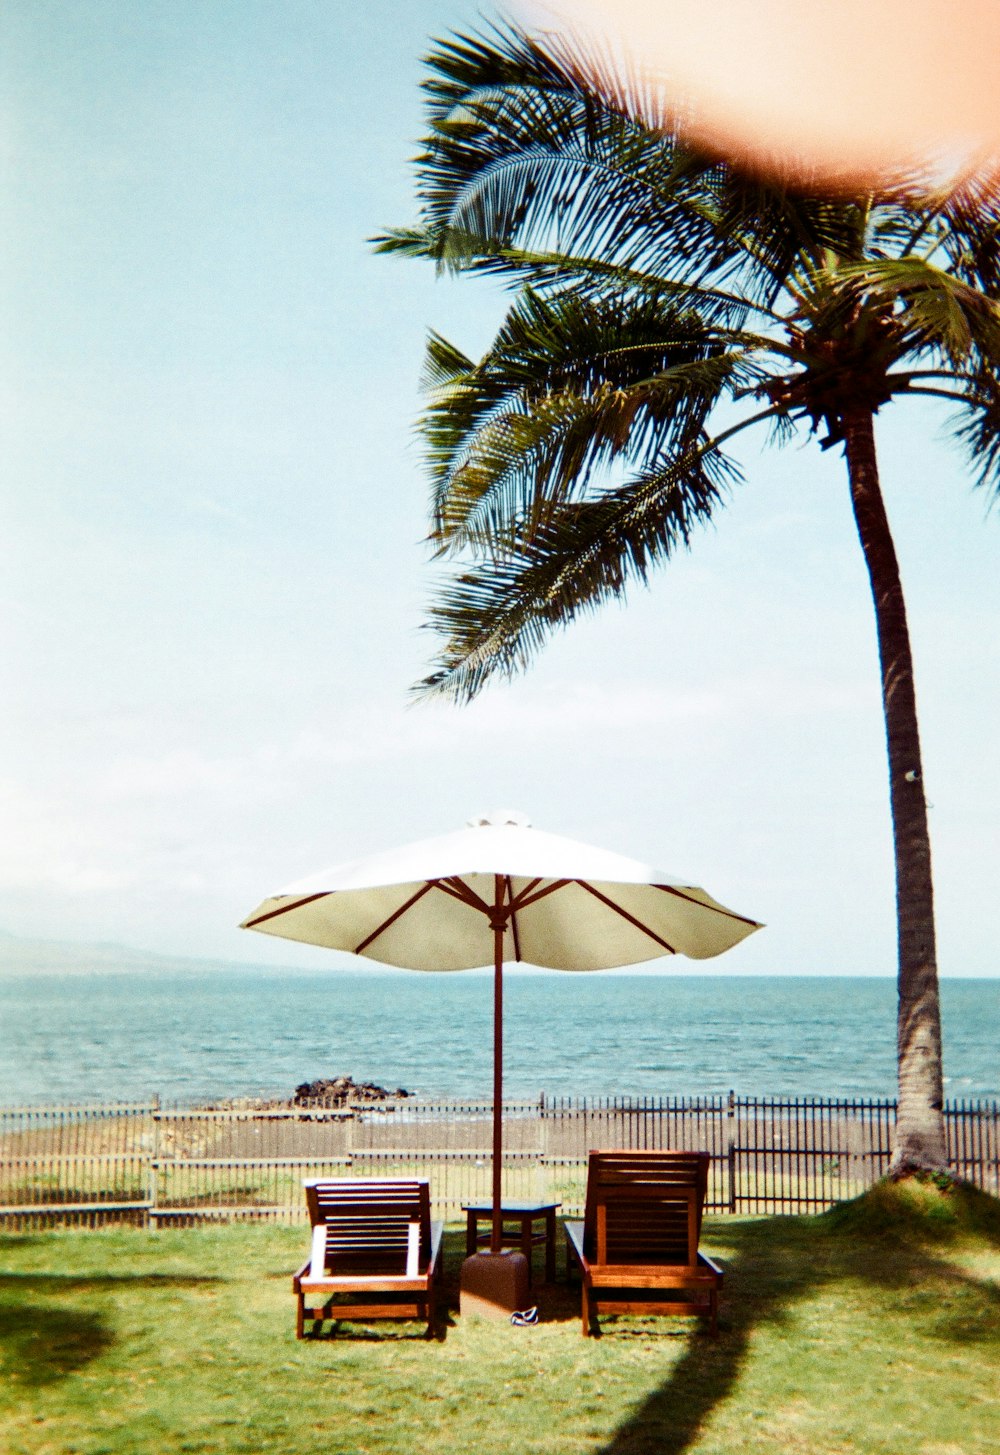 white umbrella near palm tree on beach during daytime